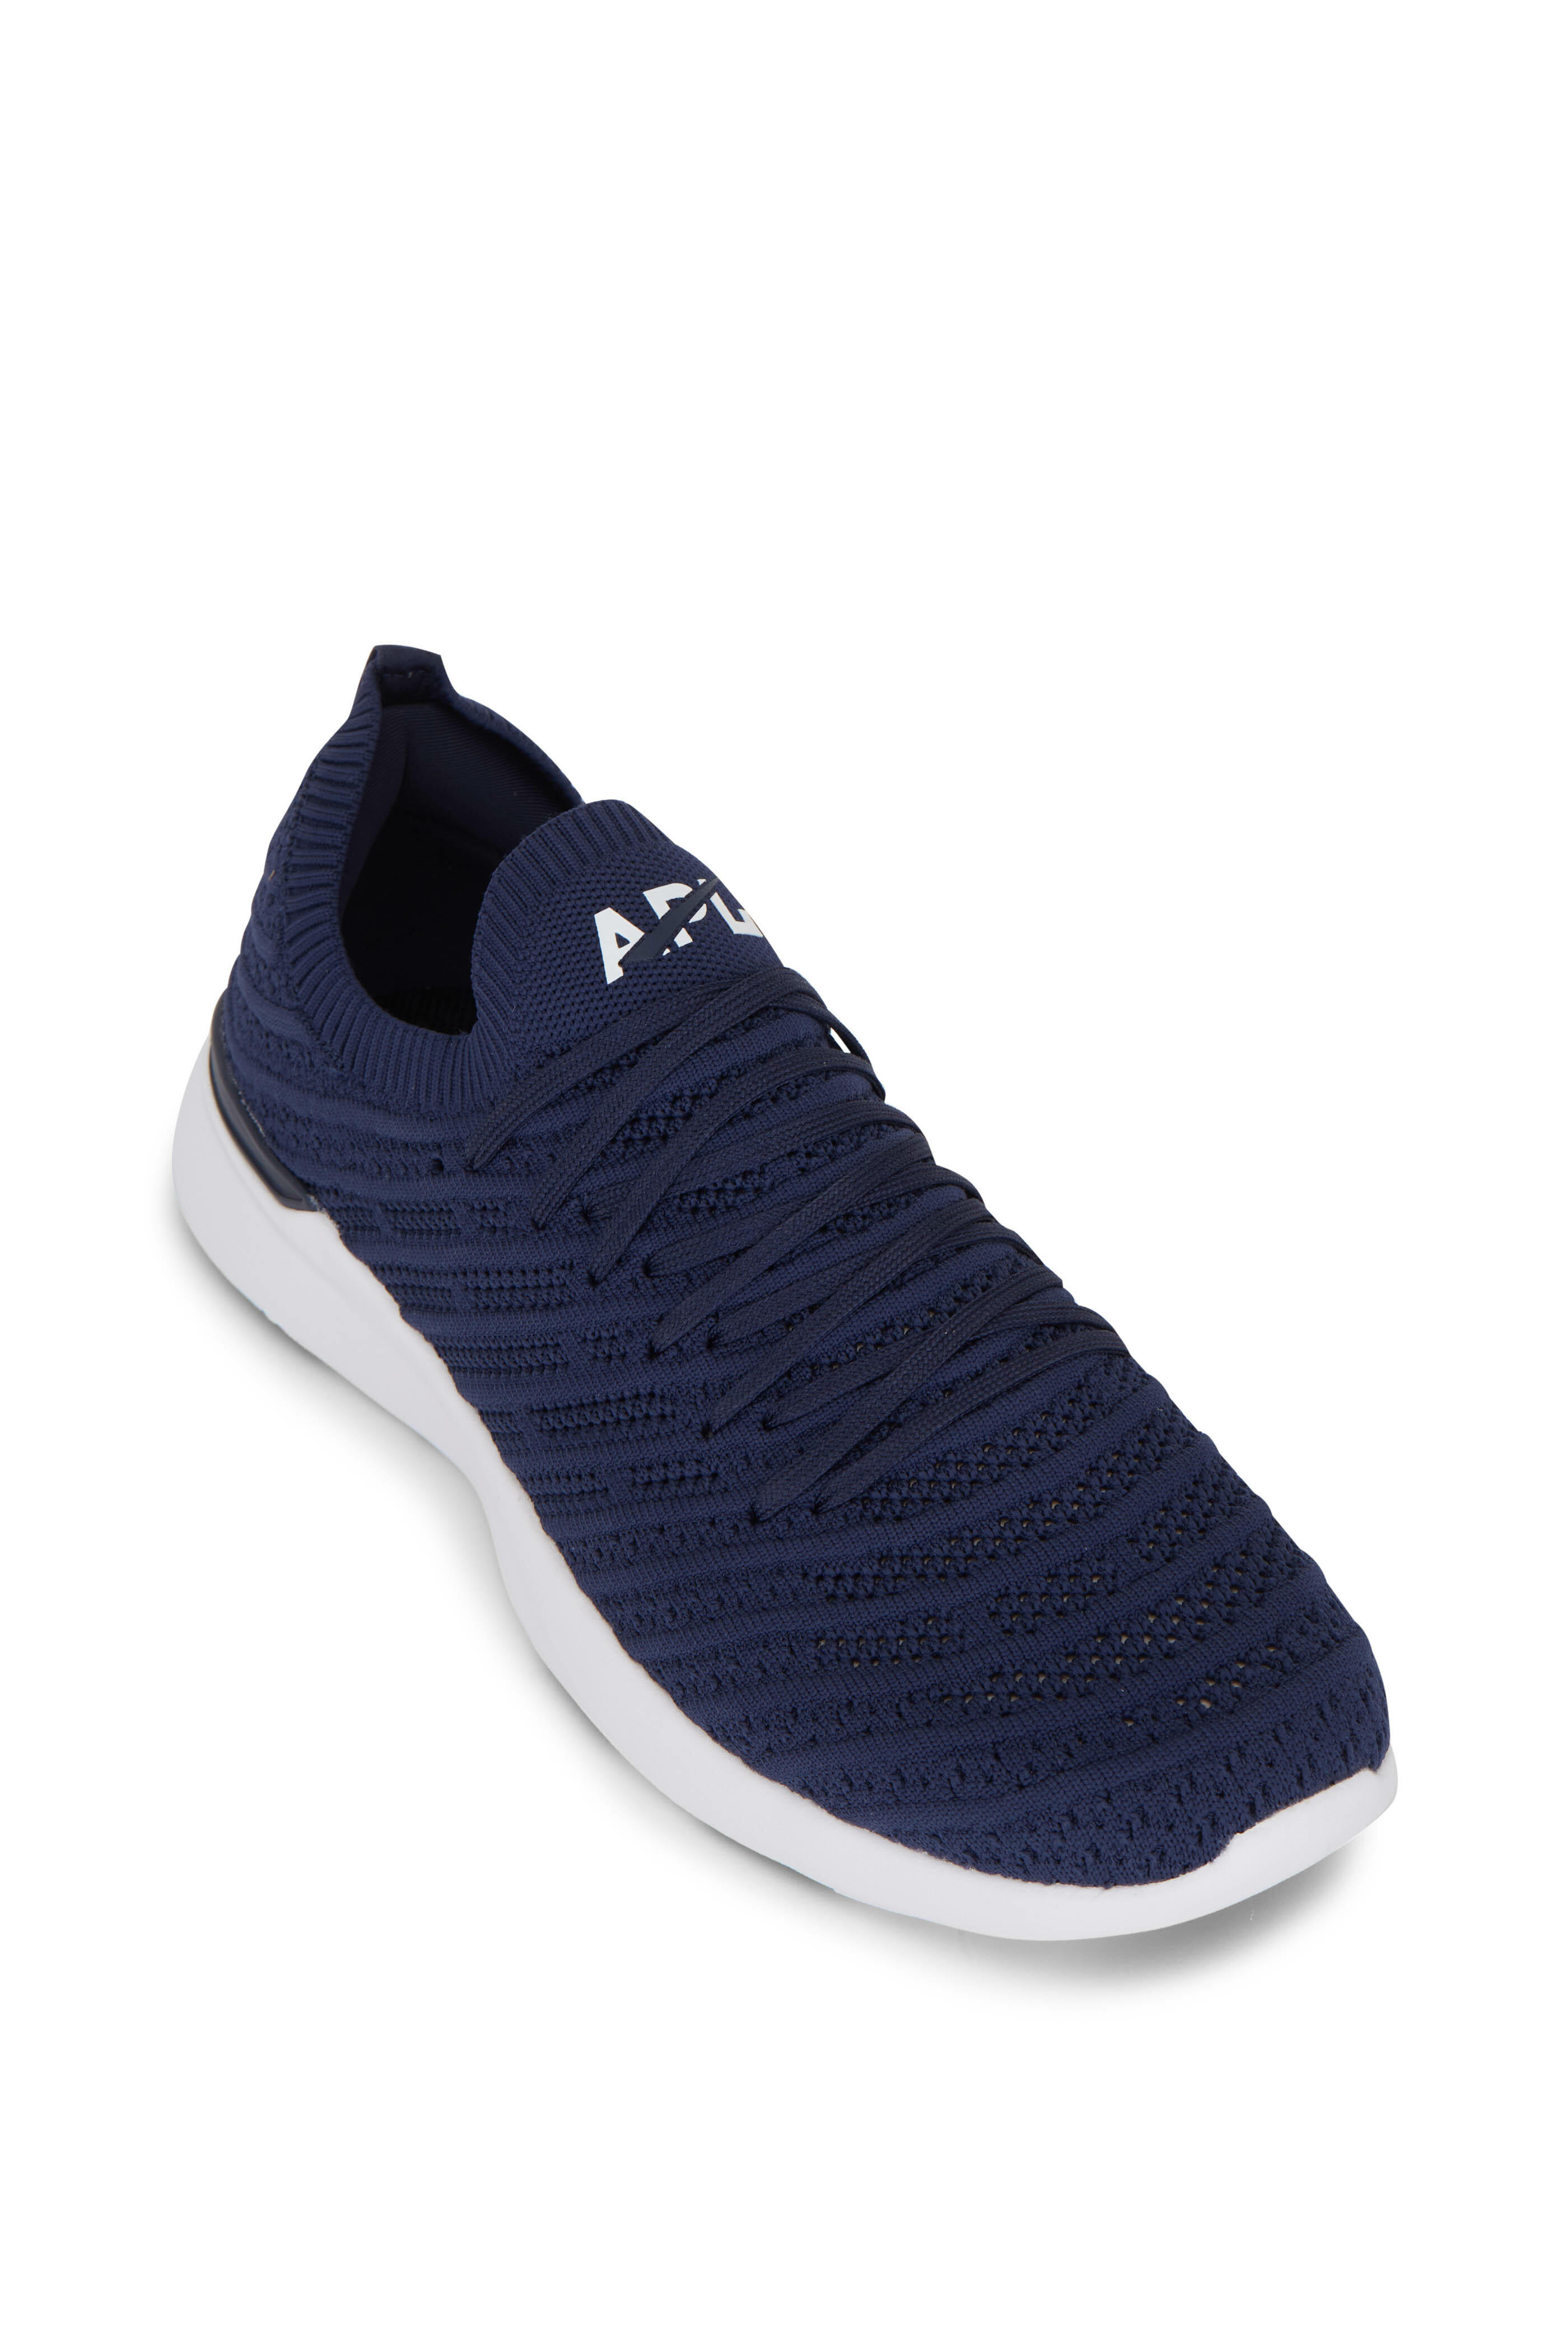 APL Athletic Propulsion Labs - Wave Navy TechLoom Sneaker